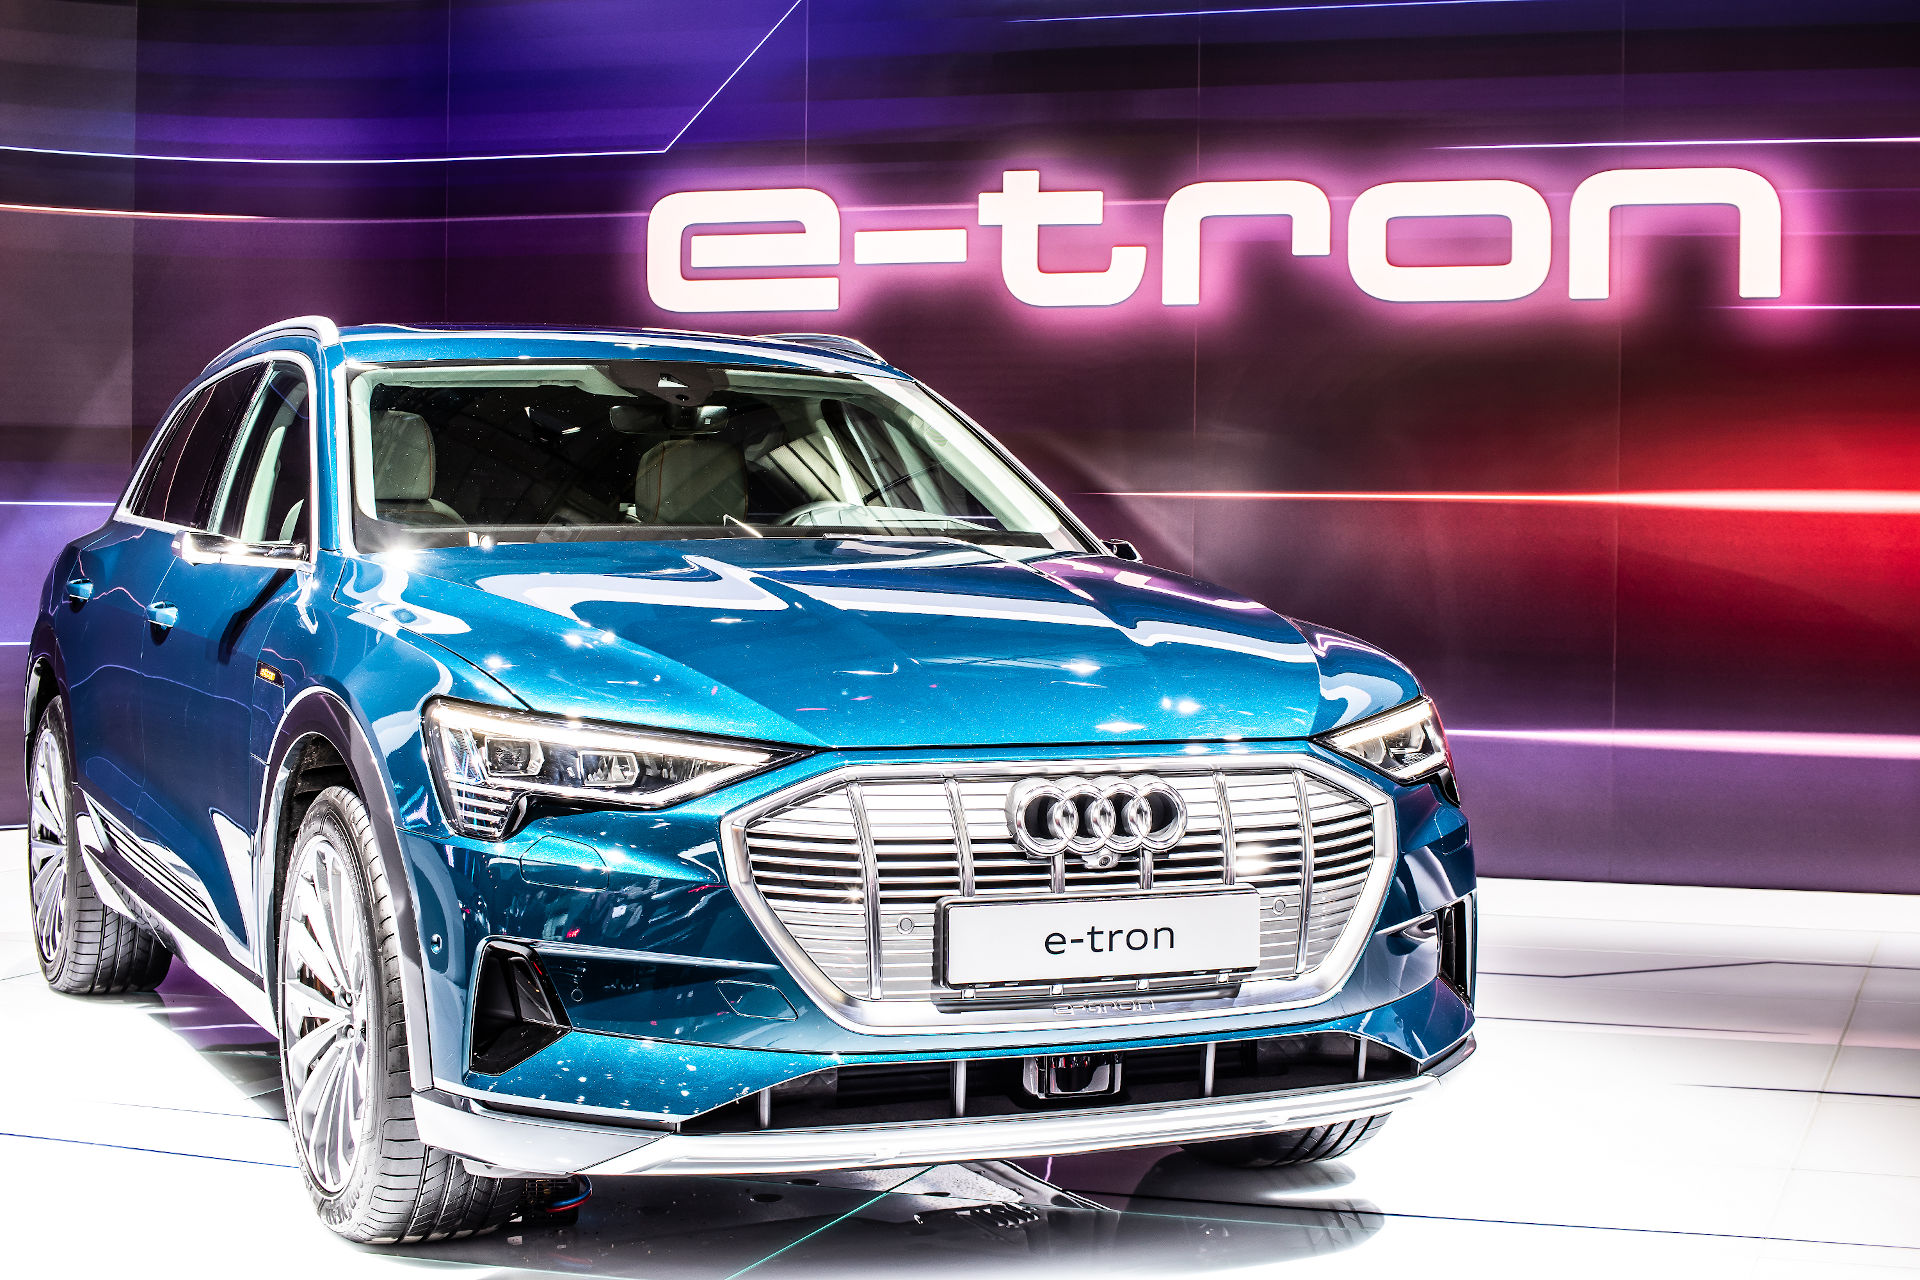 Blue Audi e-tron on display